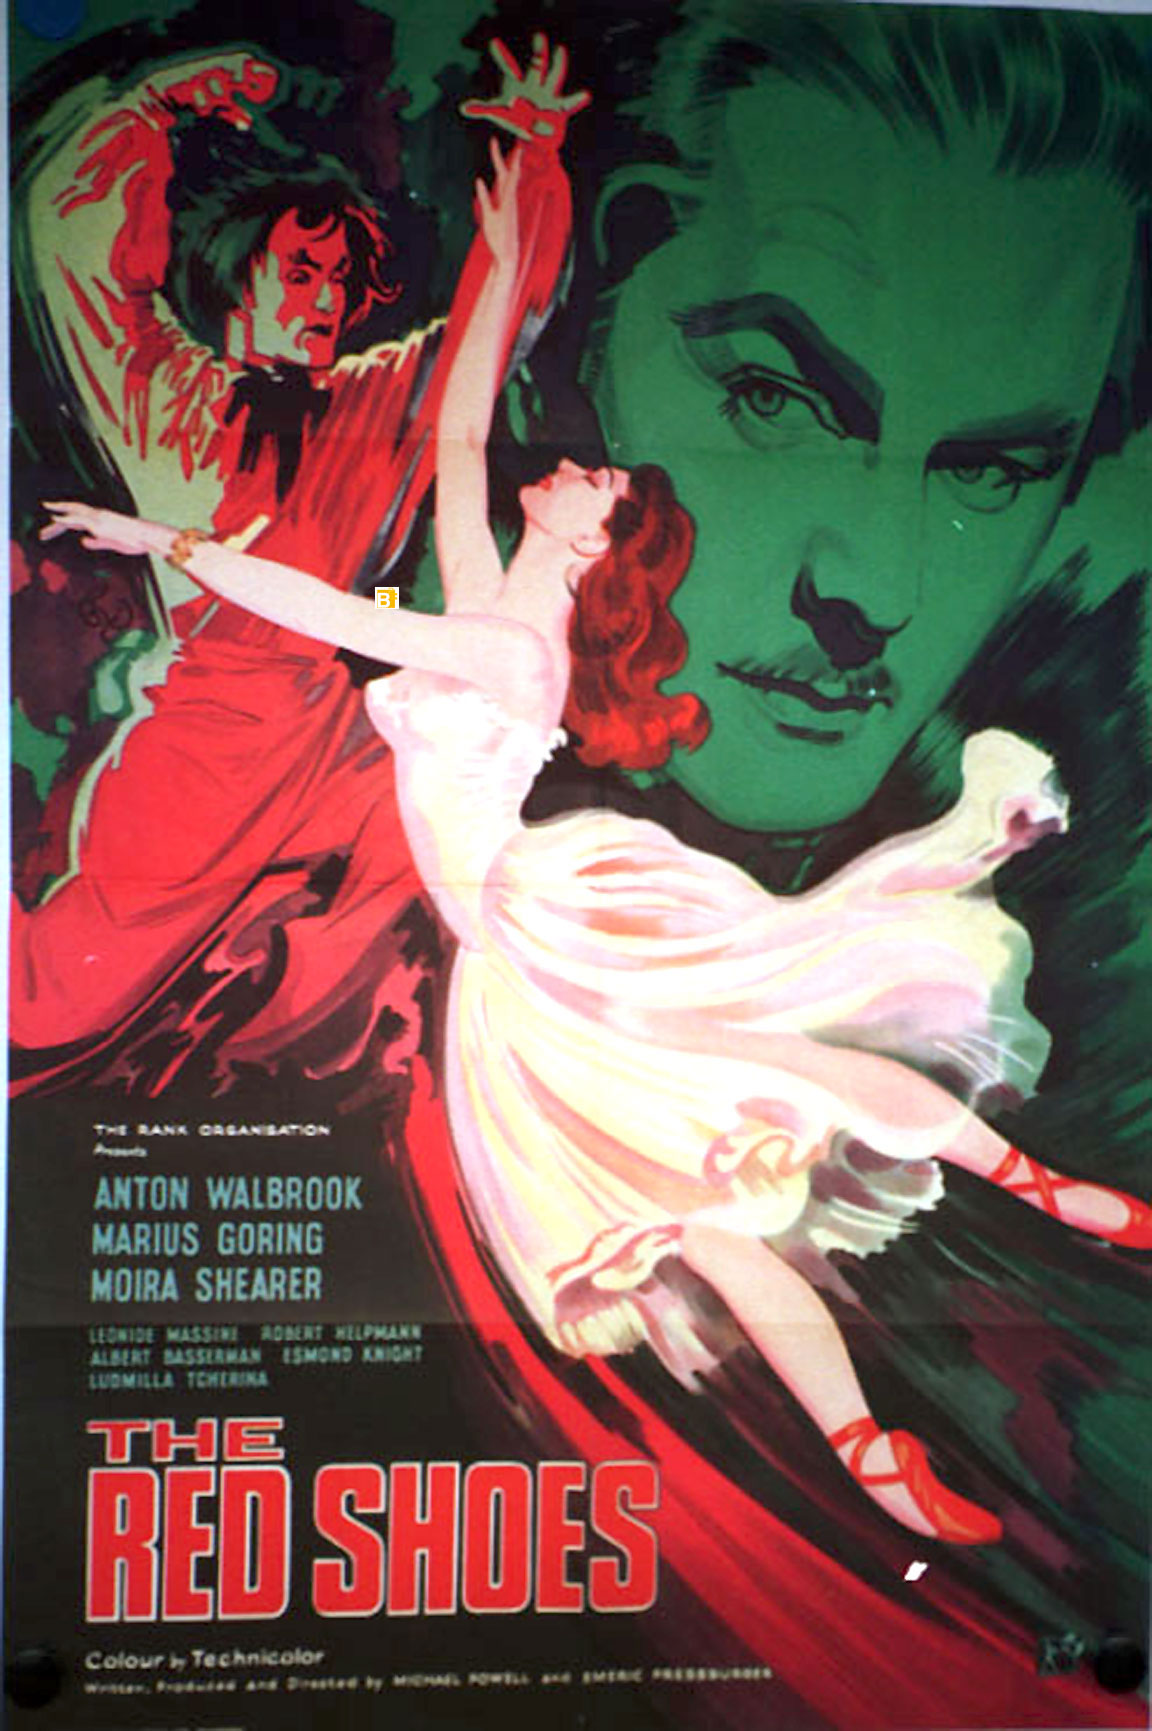 The Red Shoes ***** (1948, Anton Walbrook, Marius Goring